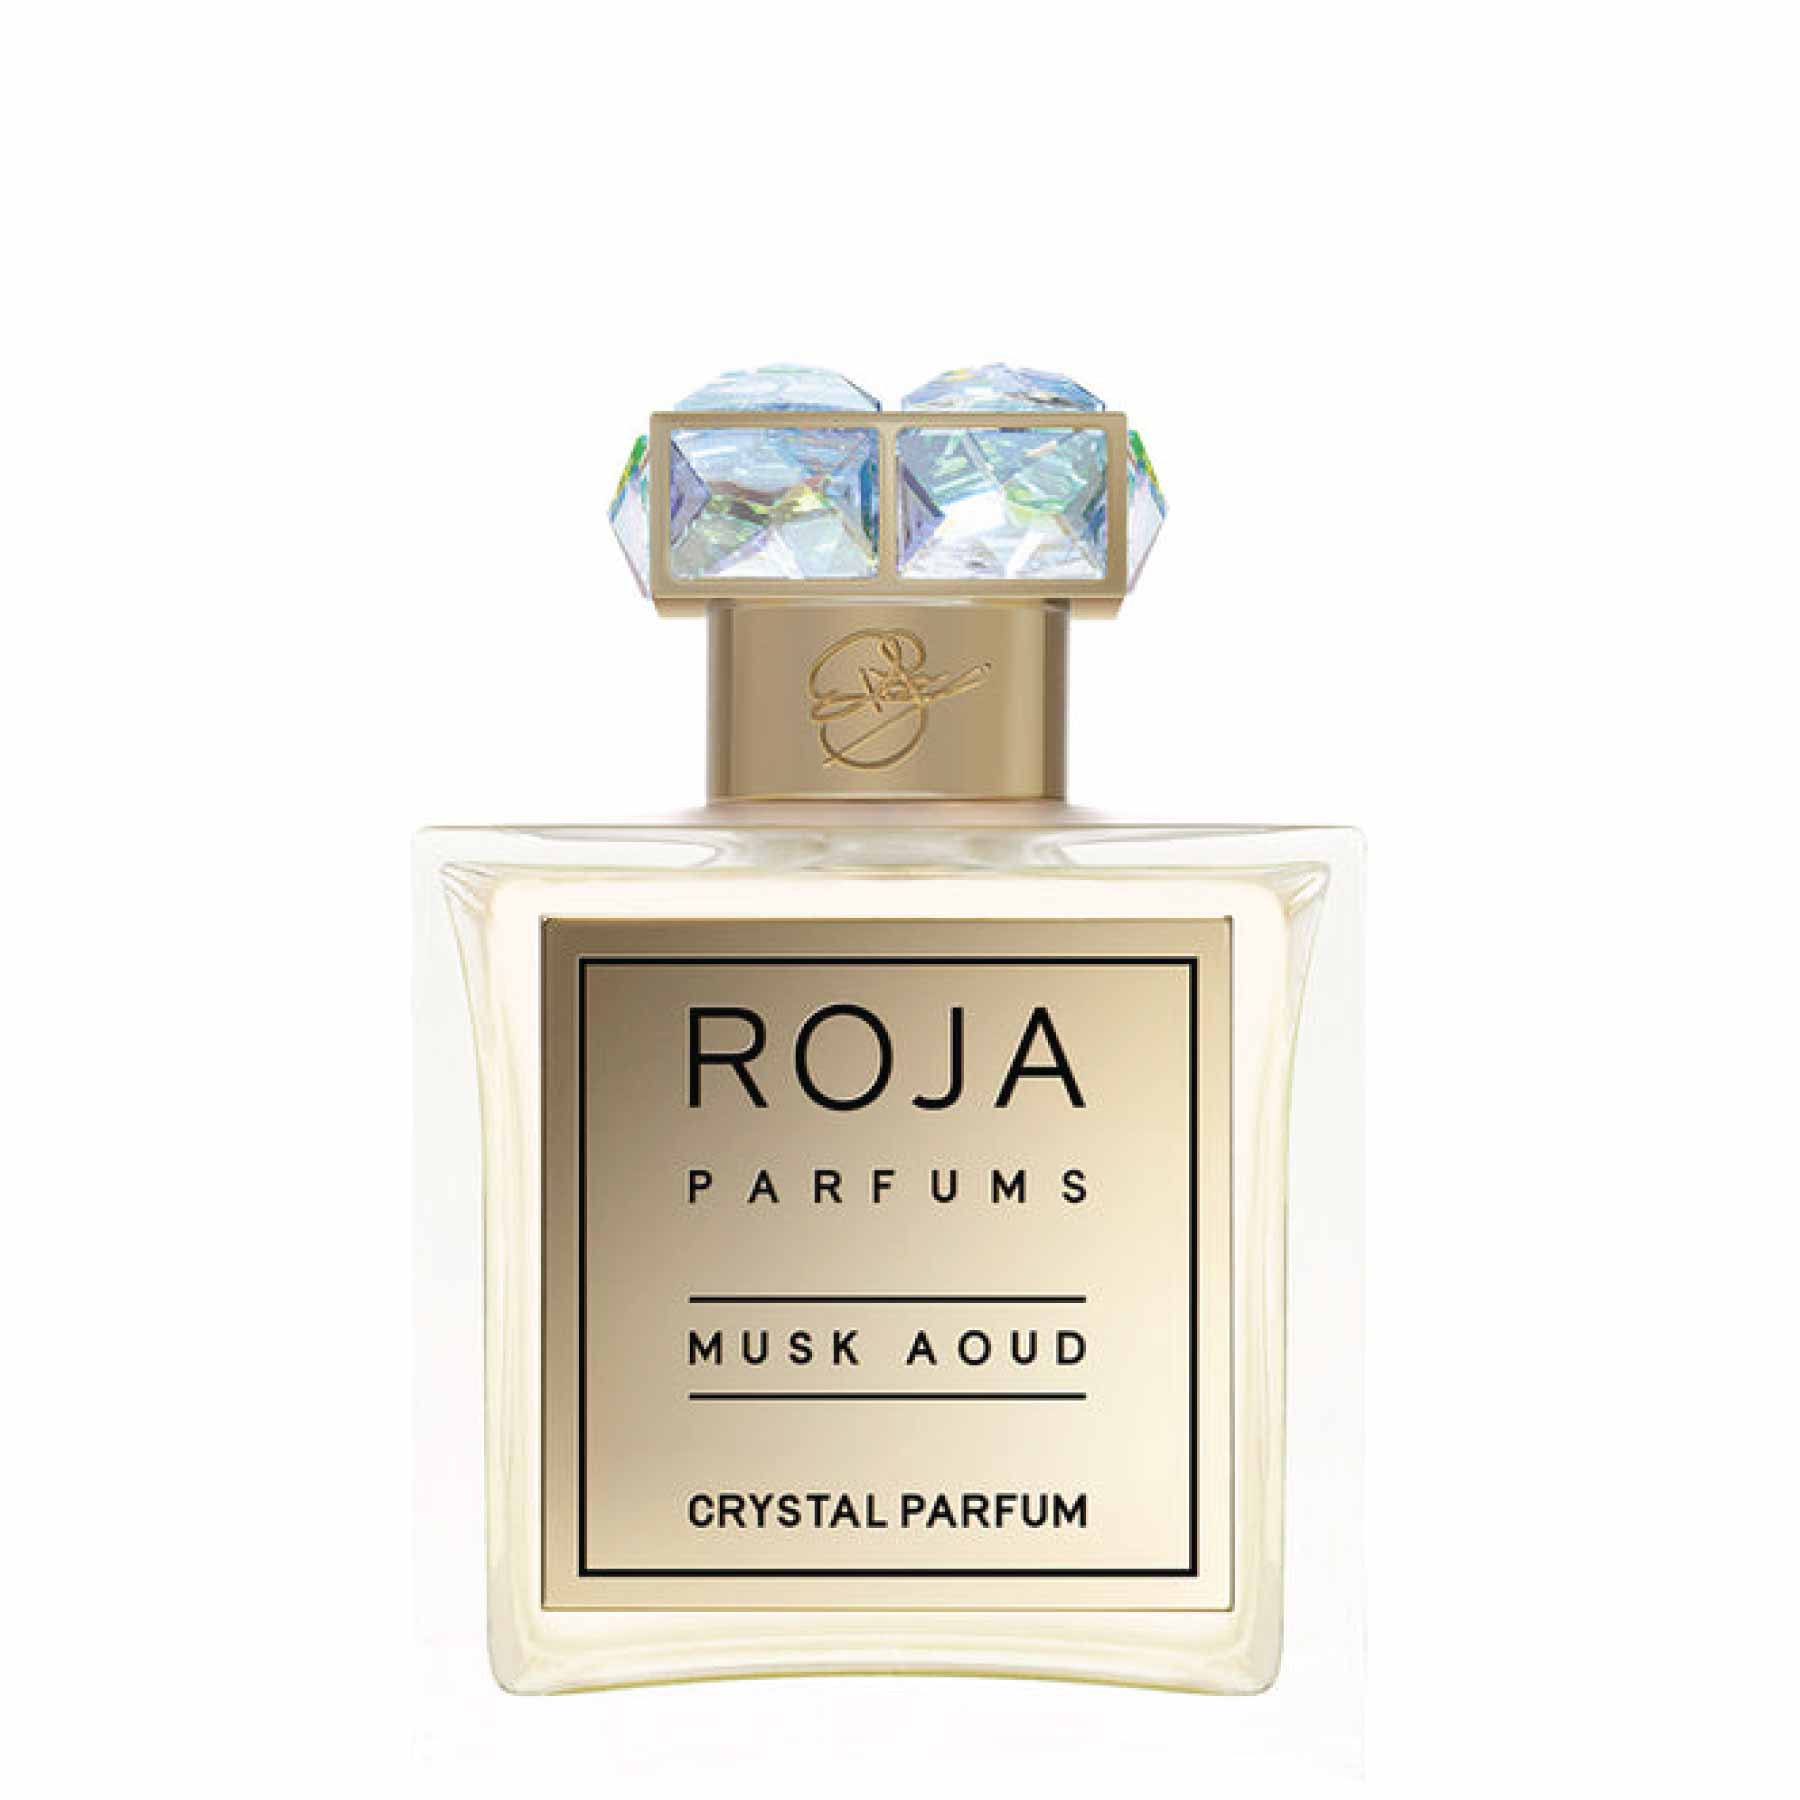 Roja - Musk Aoud Crystal Parfum.